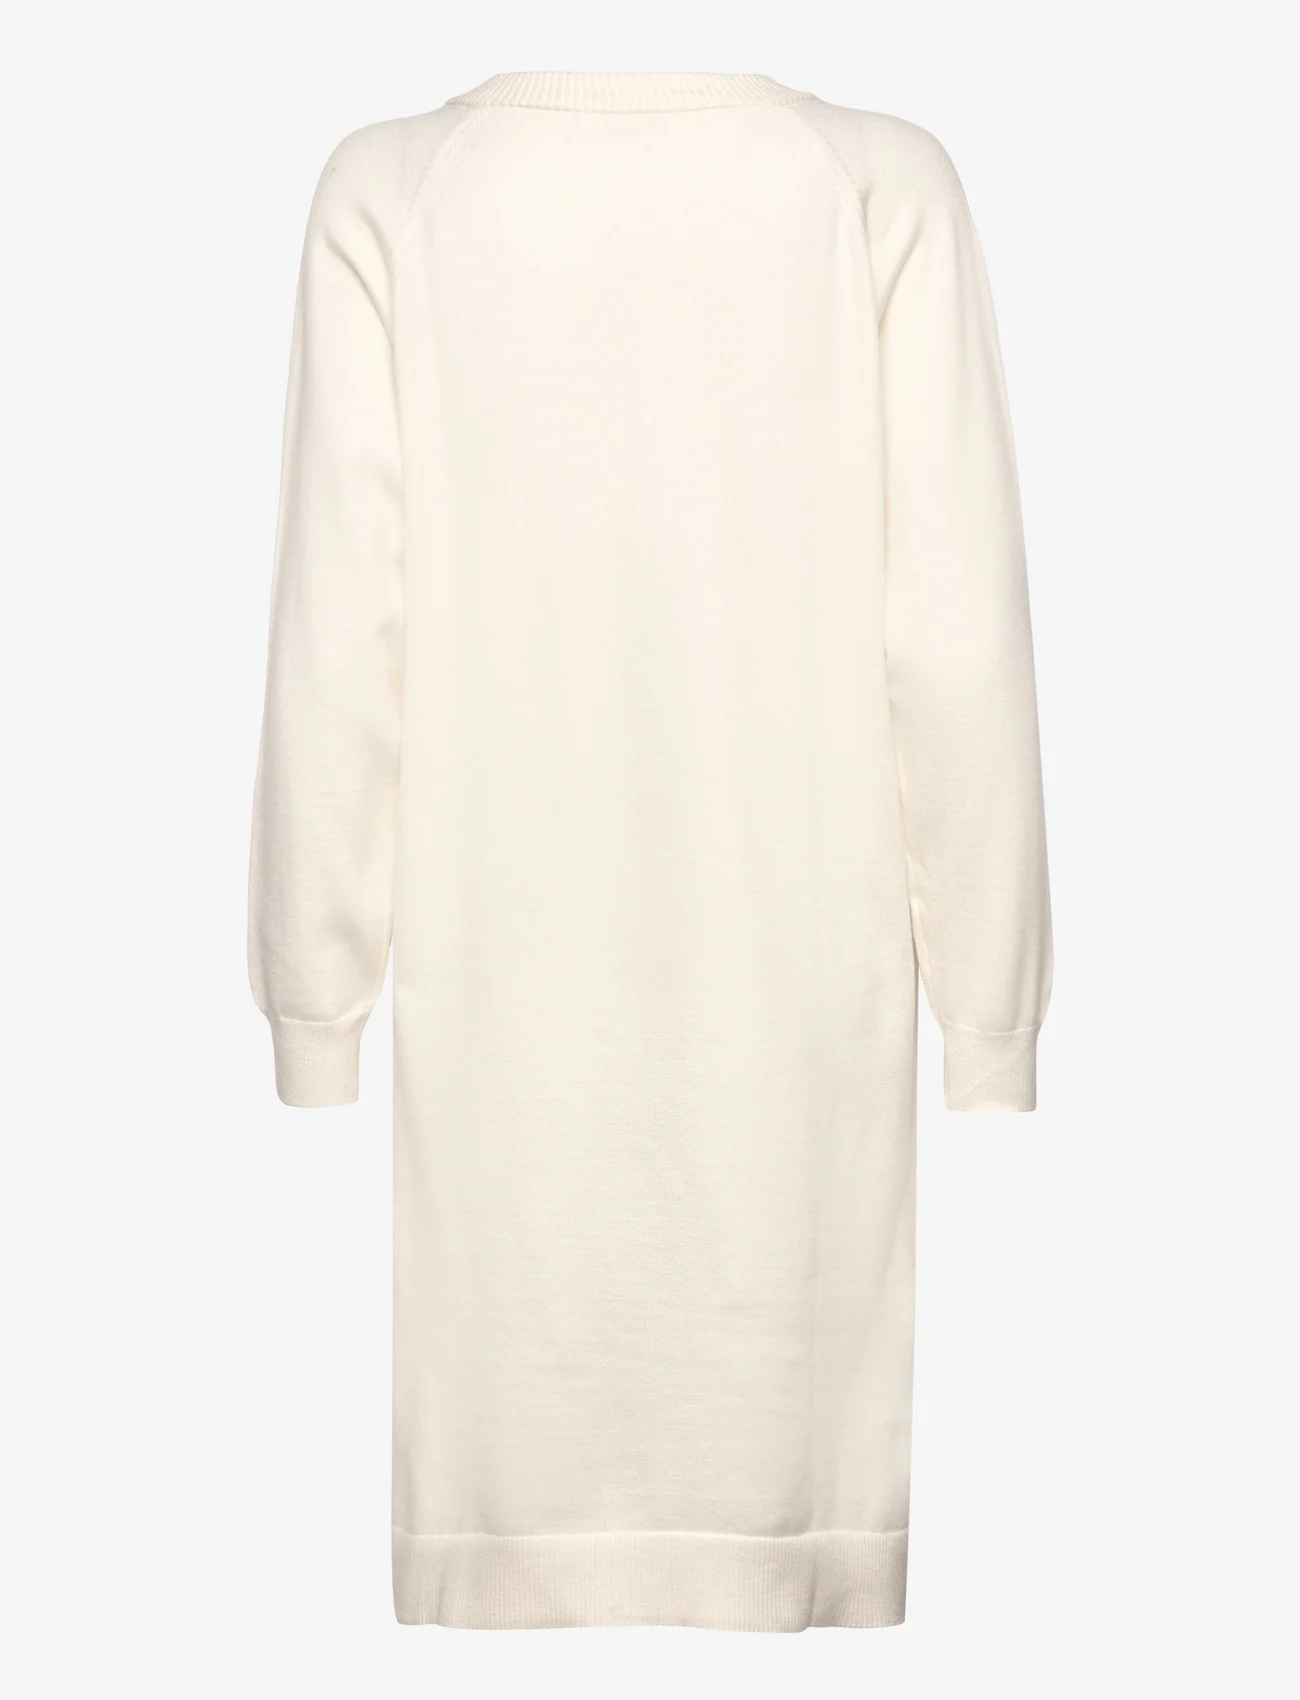 Coster Copenhagen - CC Heart CLARE comfy knit dress - neulemekot - off-white - 1